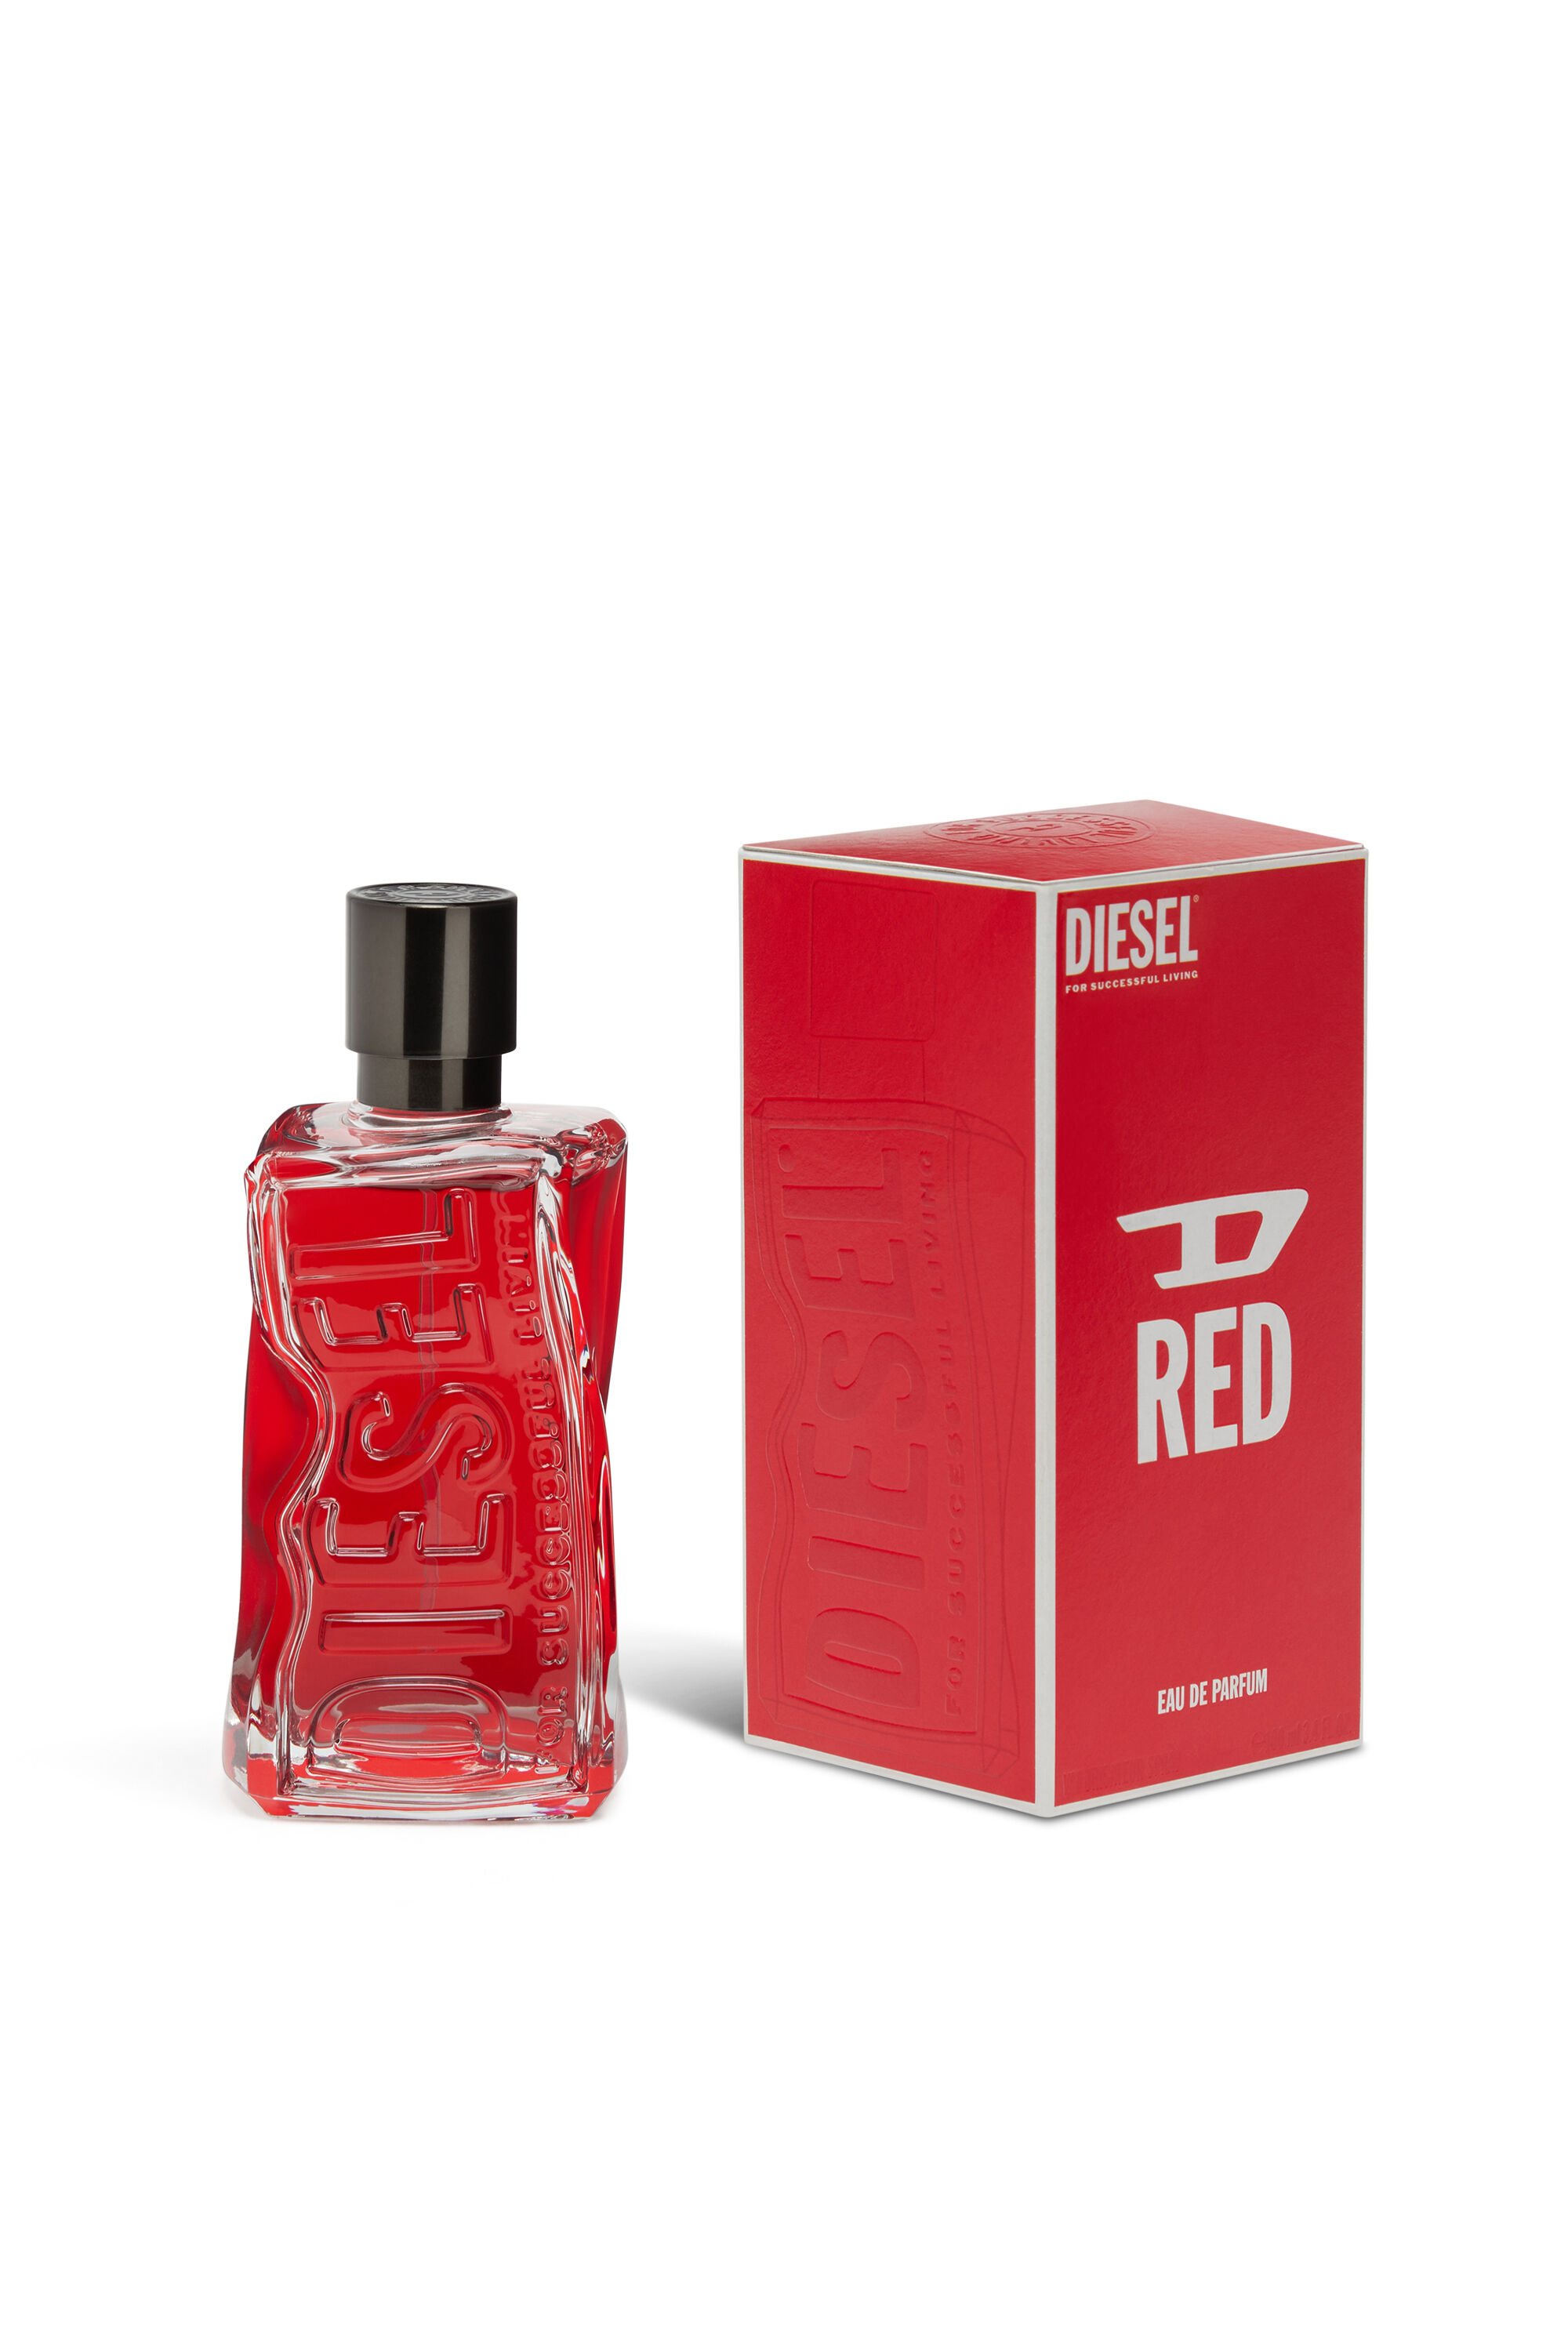 Diesel - D RED 50 ML, Uomo D RED 50ml, Eau de Parfum in Rosso - Image 2